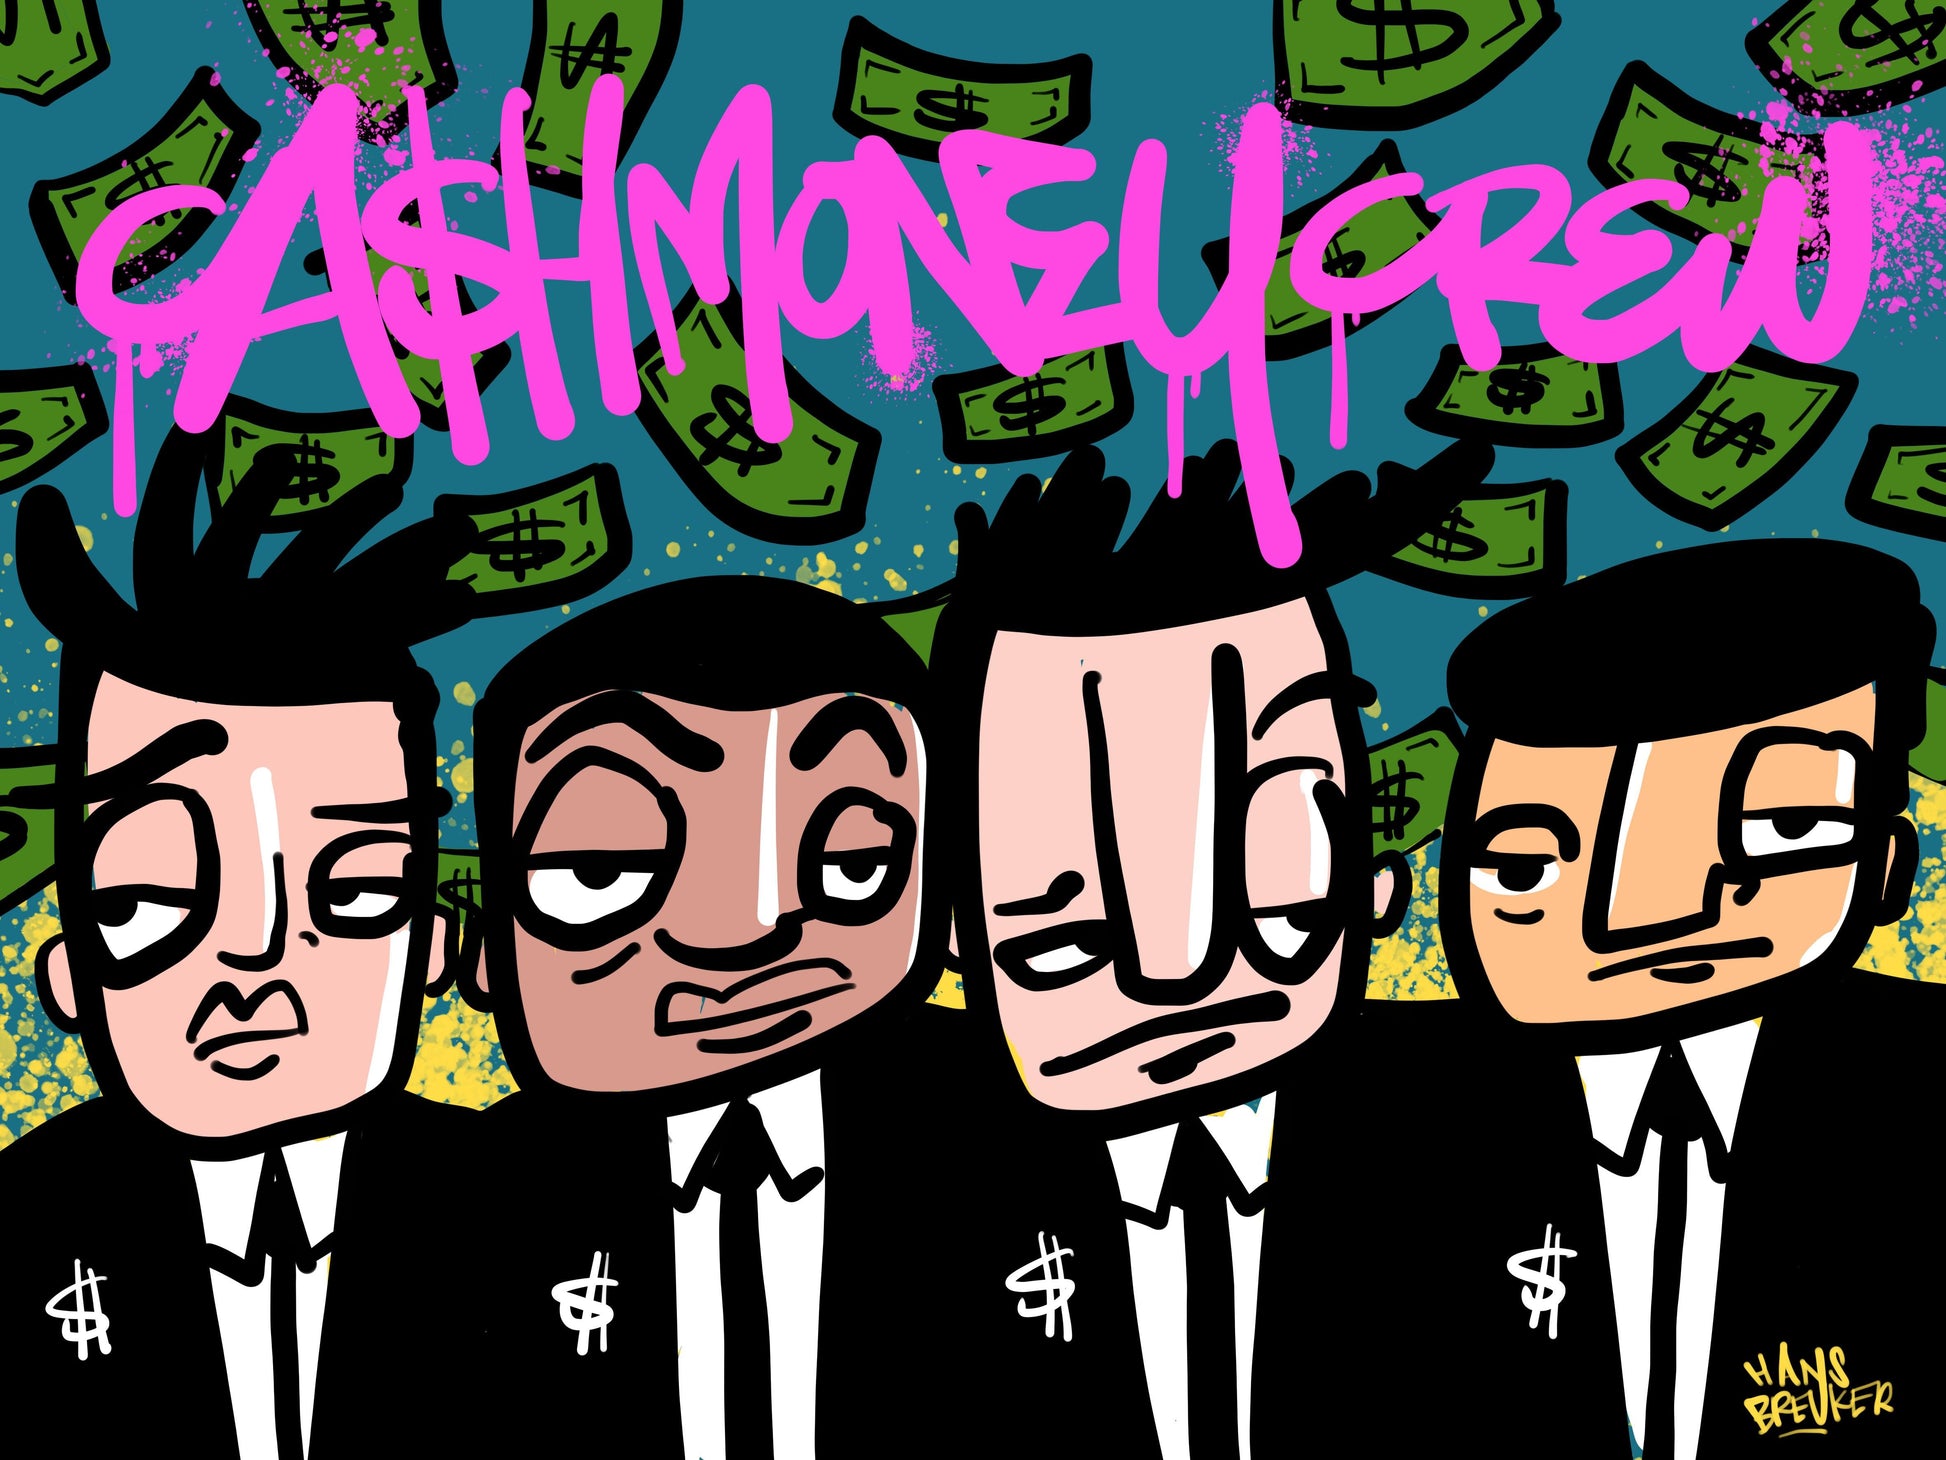 Cash money crew - Hans Breuker